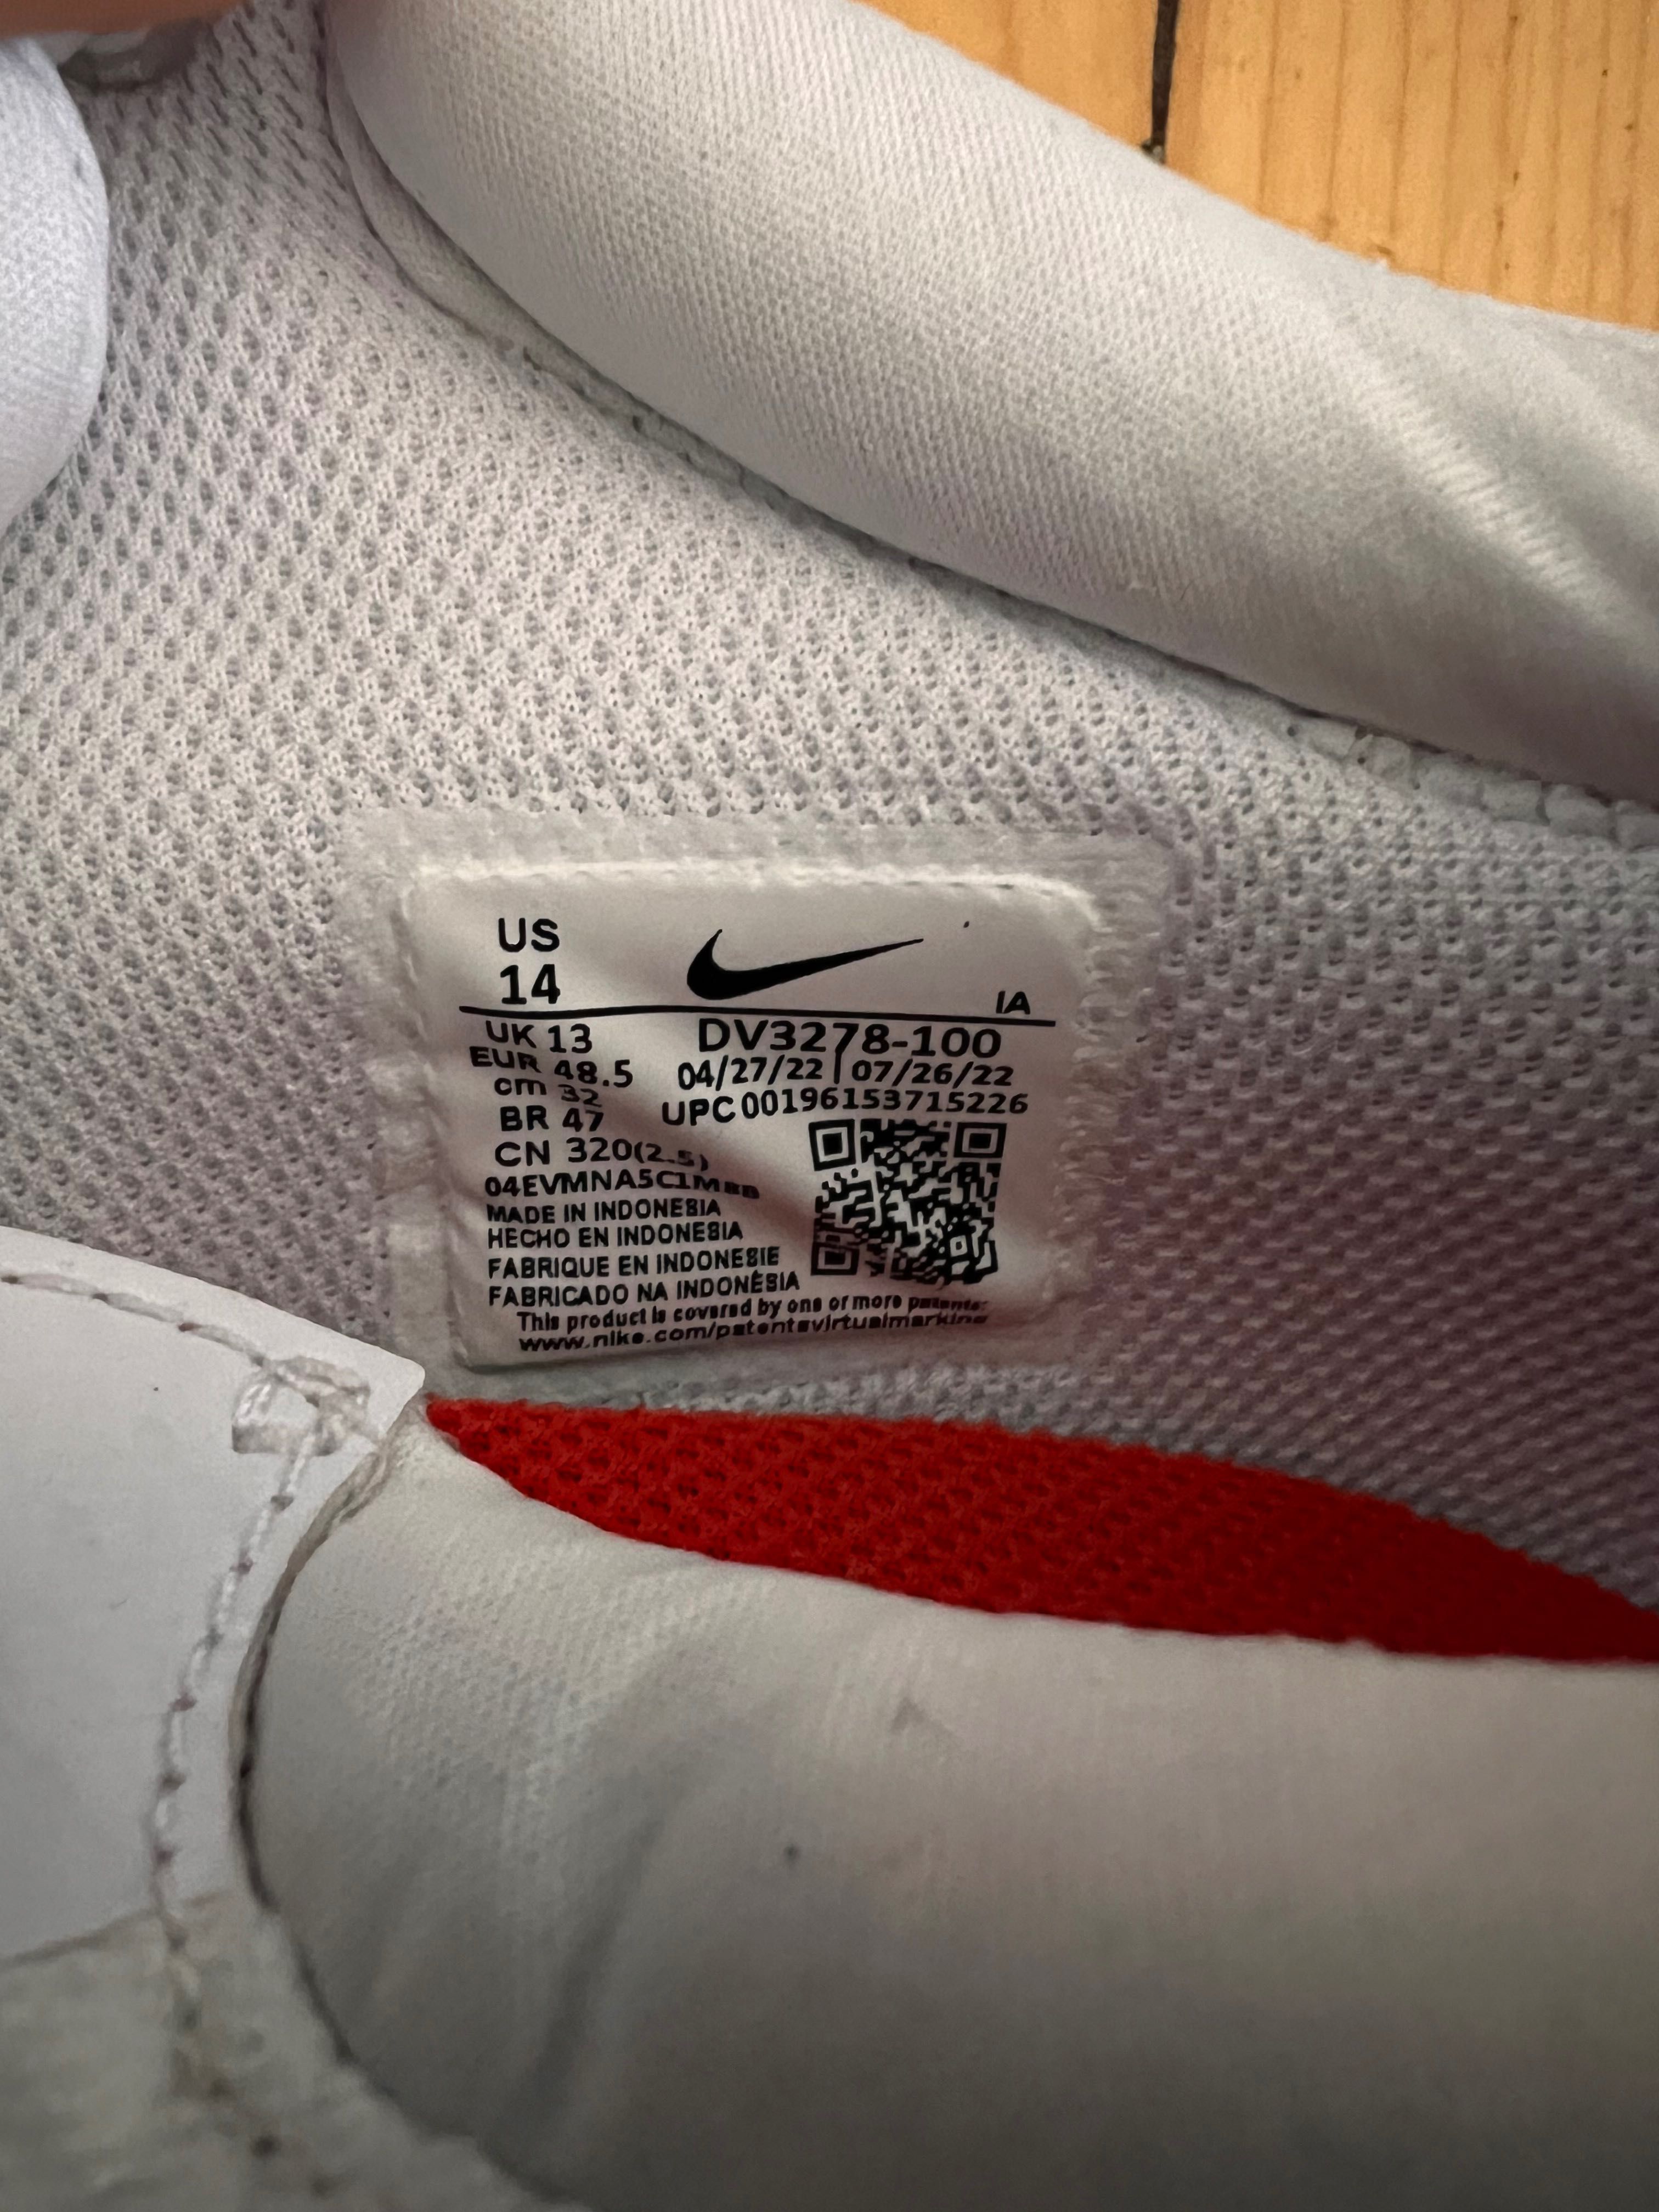 Vand Nike addidasi marimea 48,noi,originali.